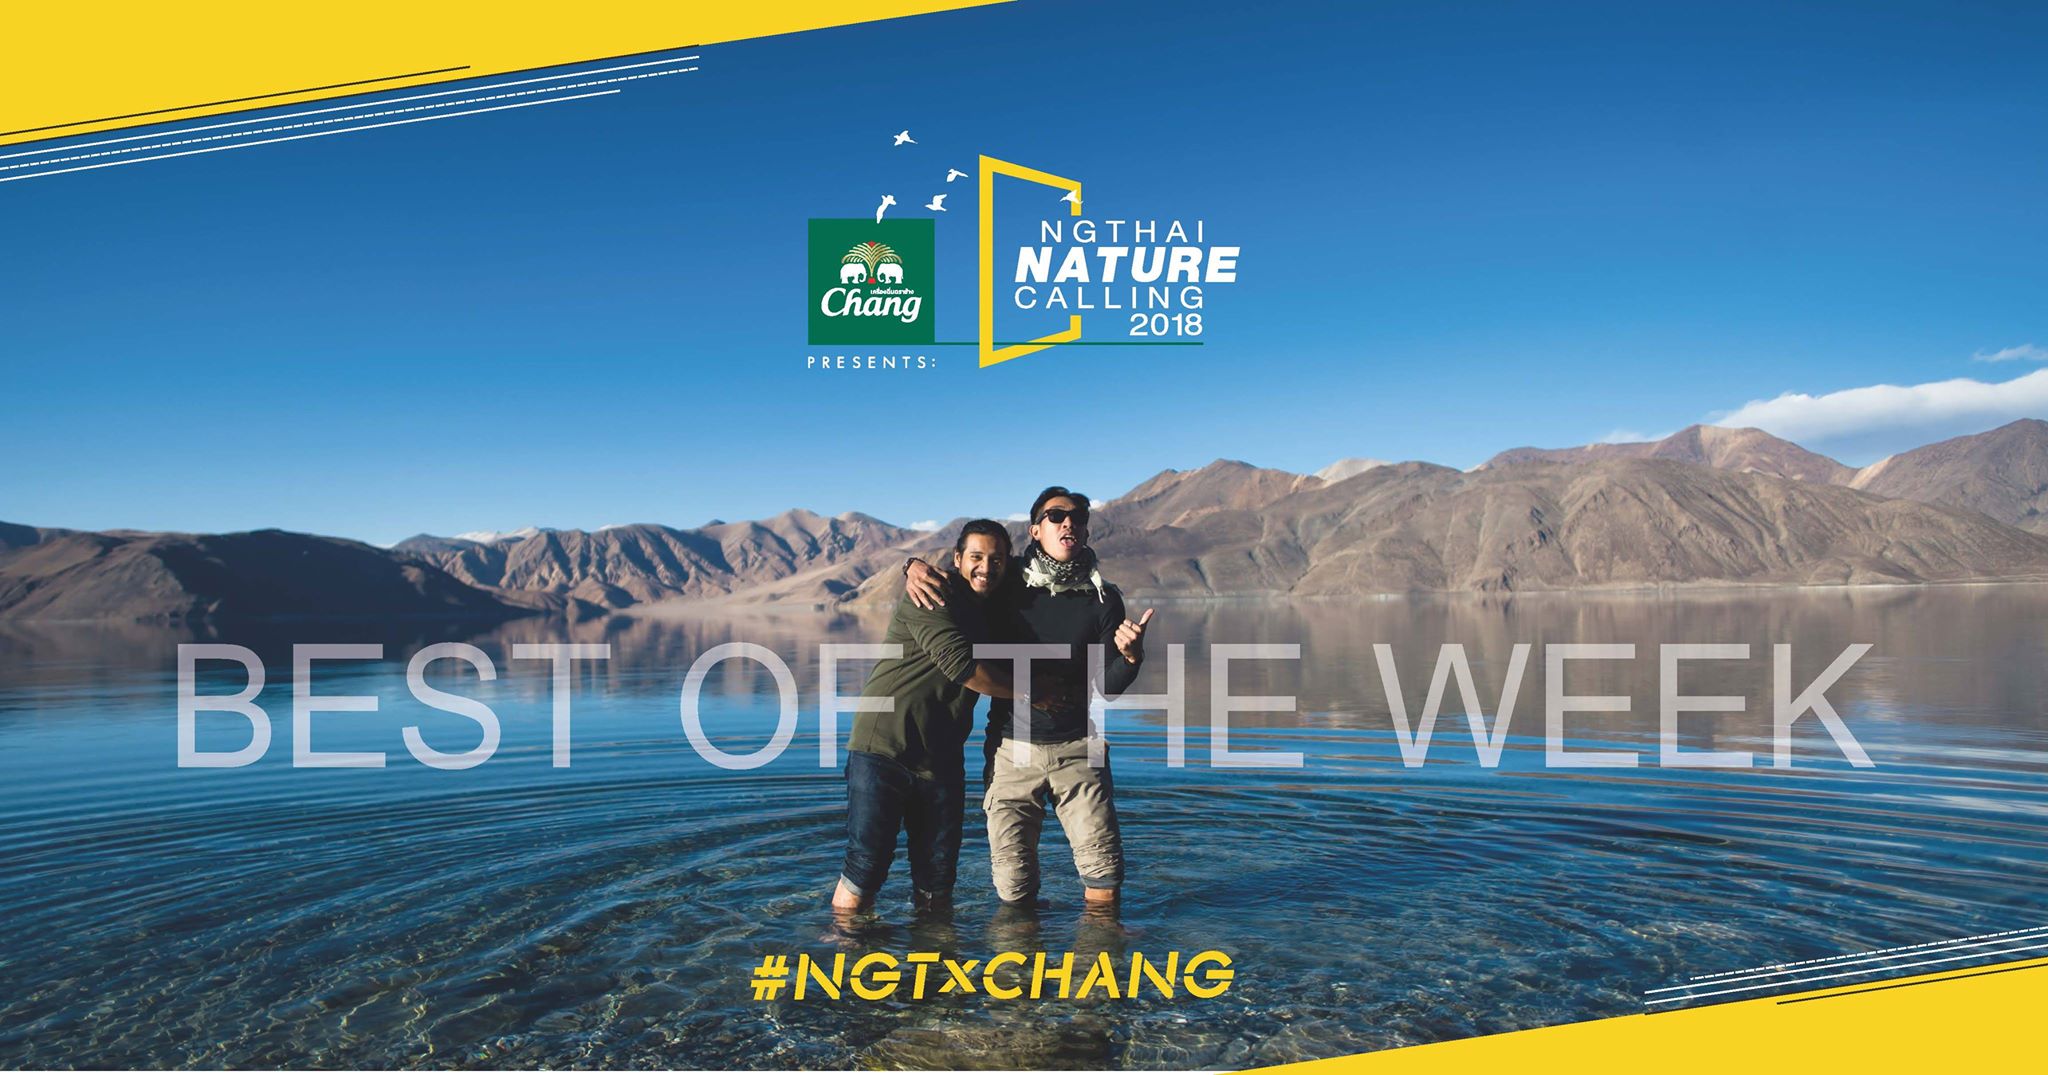 “Best of the Week” NGThaiNatureCalling2018